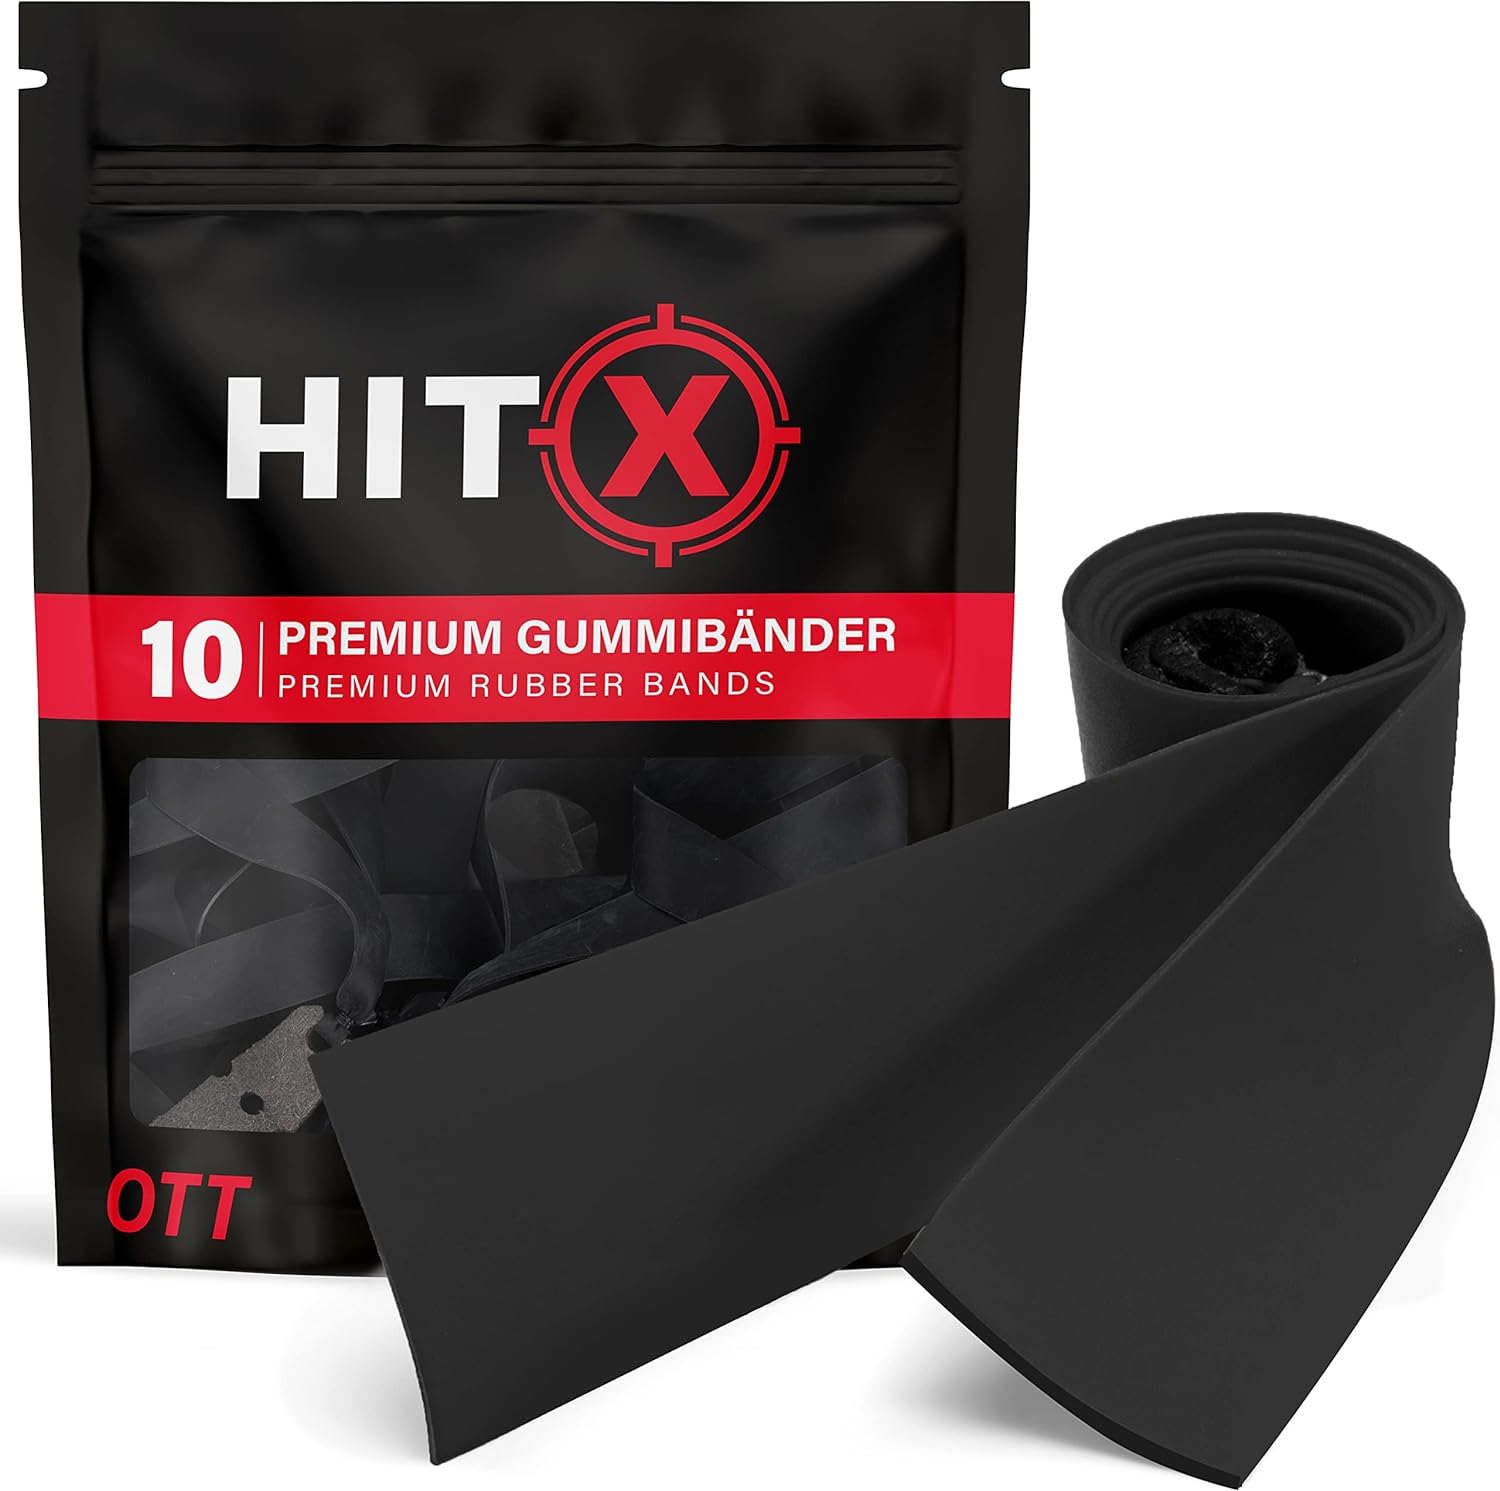 Katapult-elastiekje van HITX®